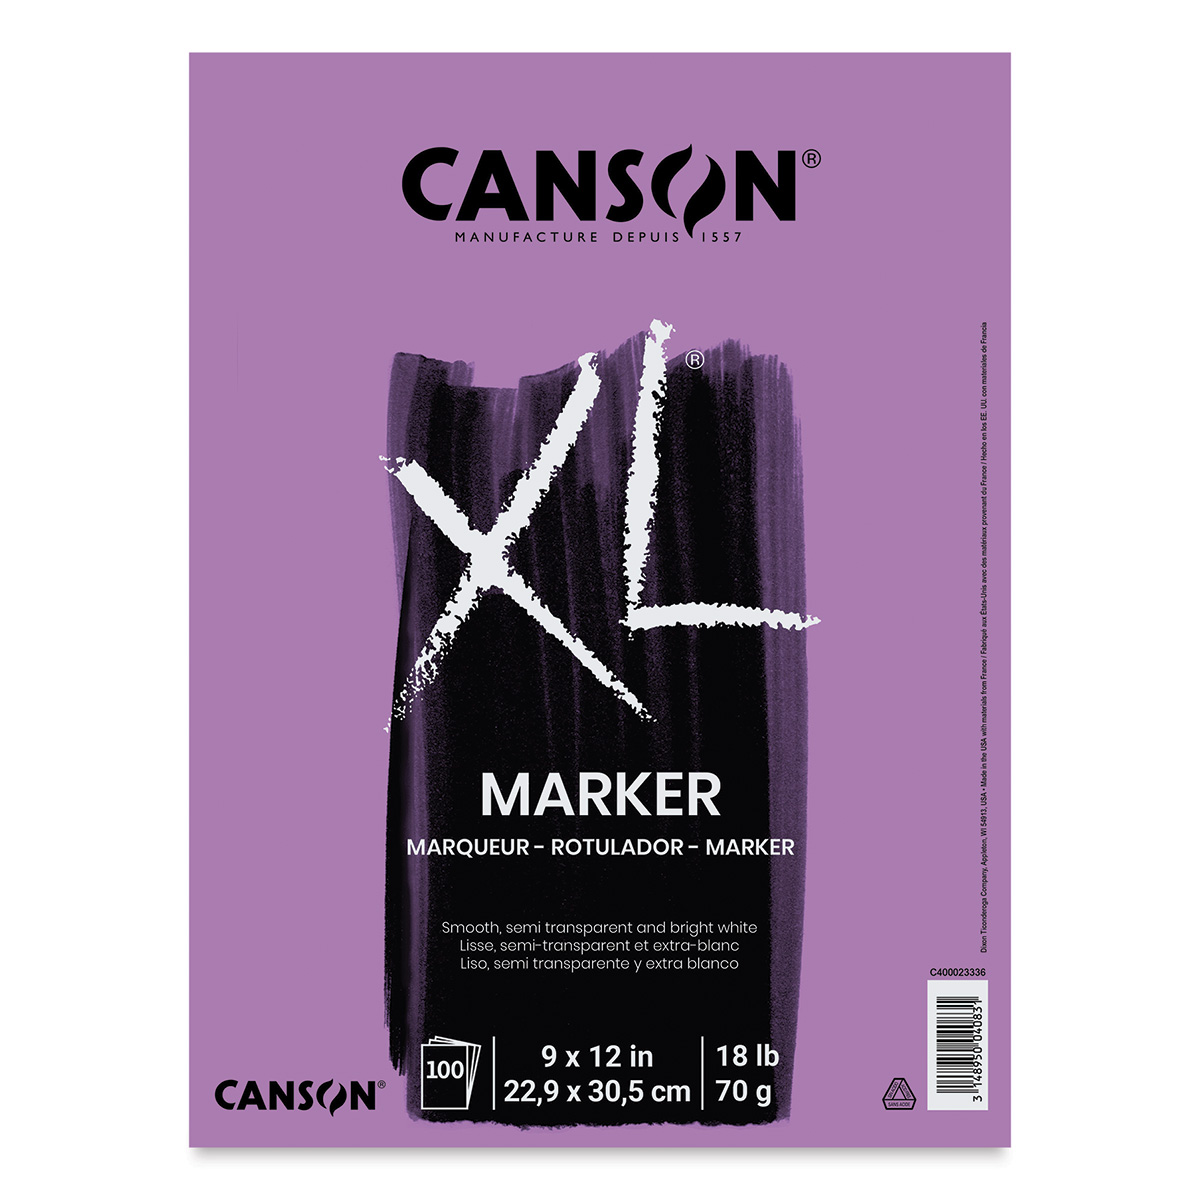 7 x 10 Canson XL Series Rough Mix Media